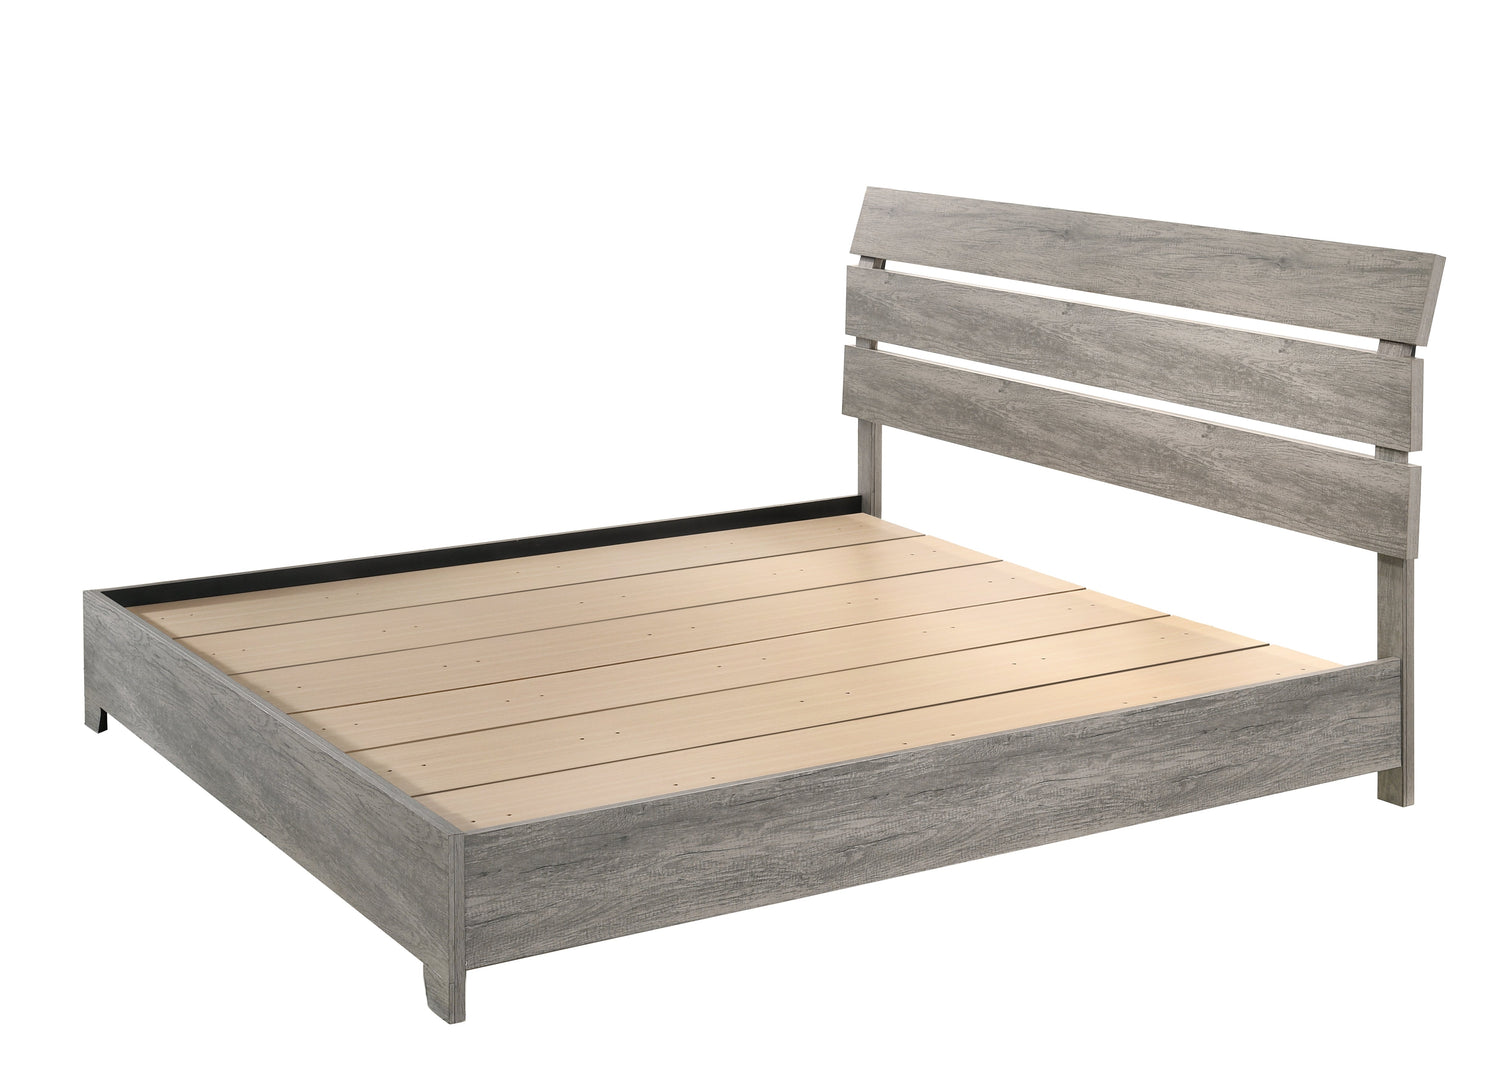 Tundra Gray Platform Bedroom Set - SET | B5520-Q-HBFB | B5520-KQ-RAIL | B5520-2 | B5520-4 - Bien Home Furniture &amp; Electronics